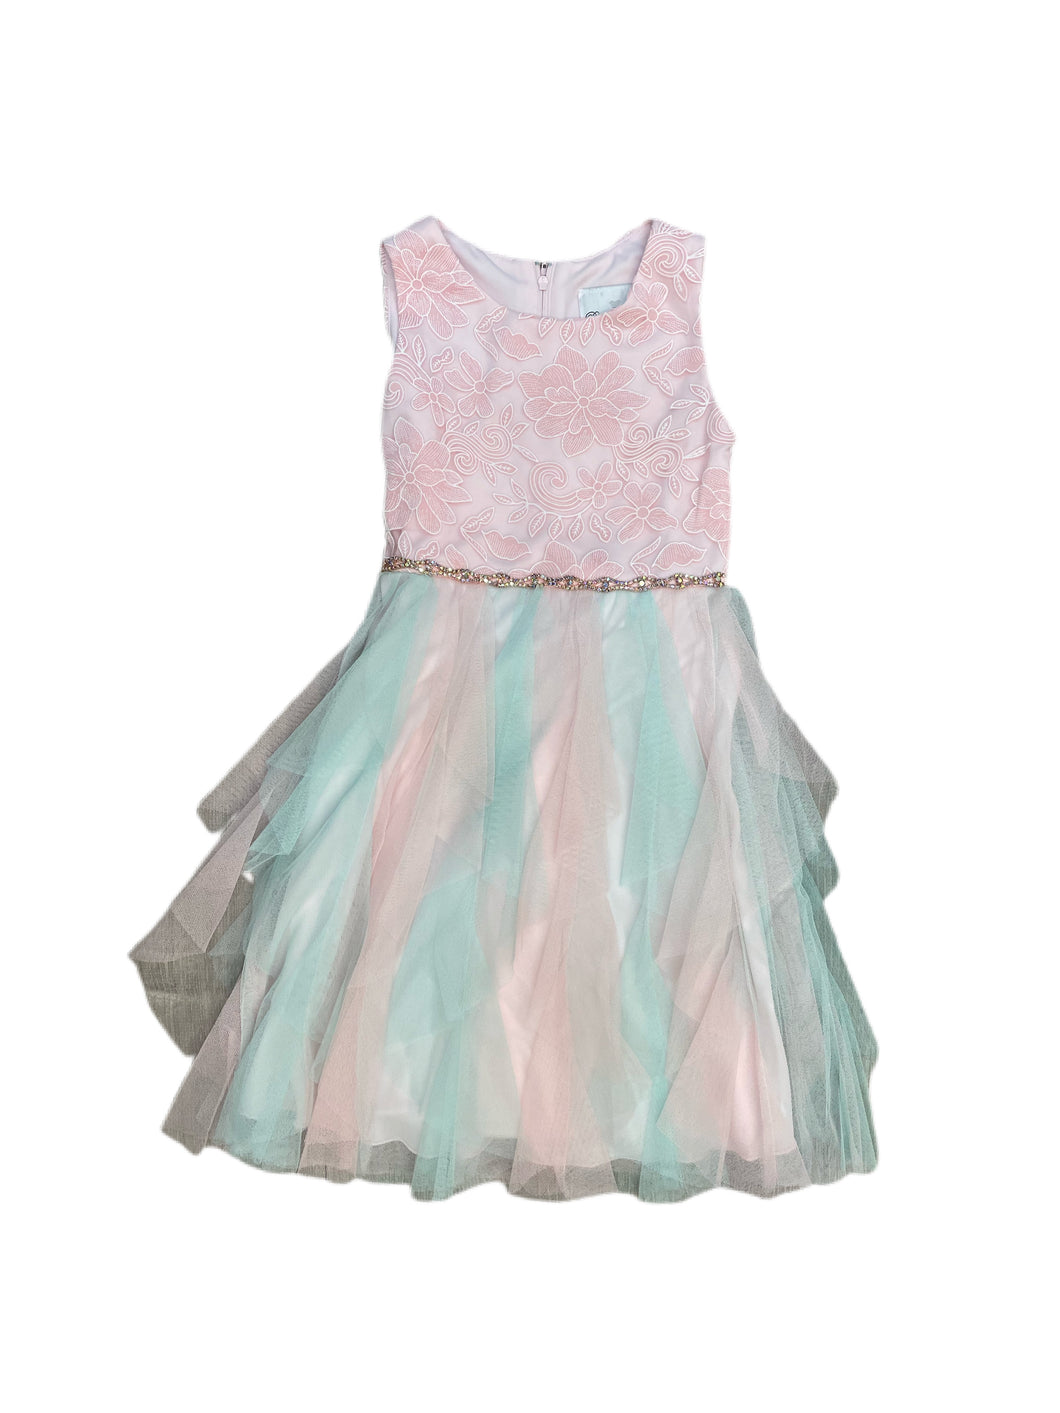 Rare Editions Pink/Mint Mermaid Dress